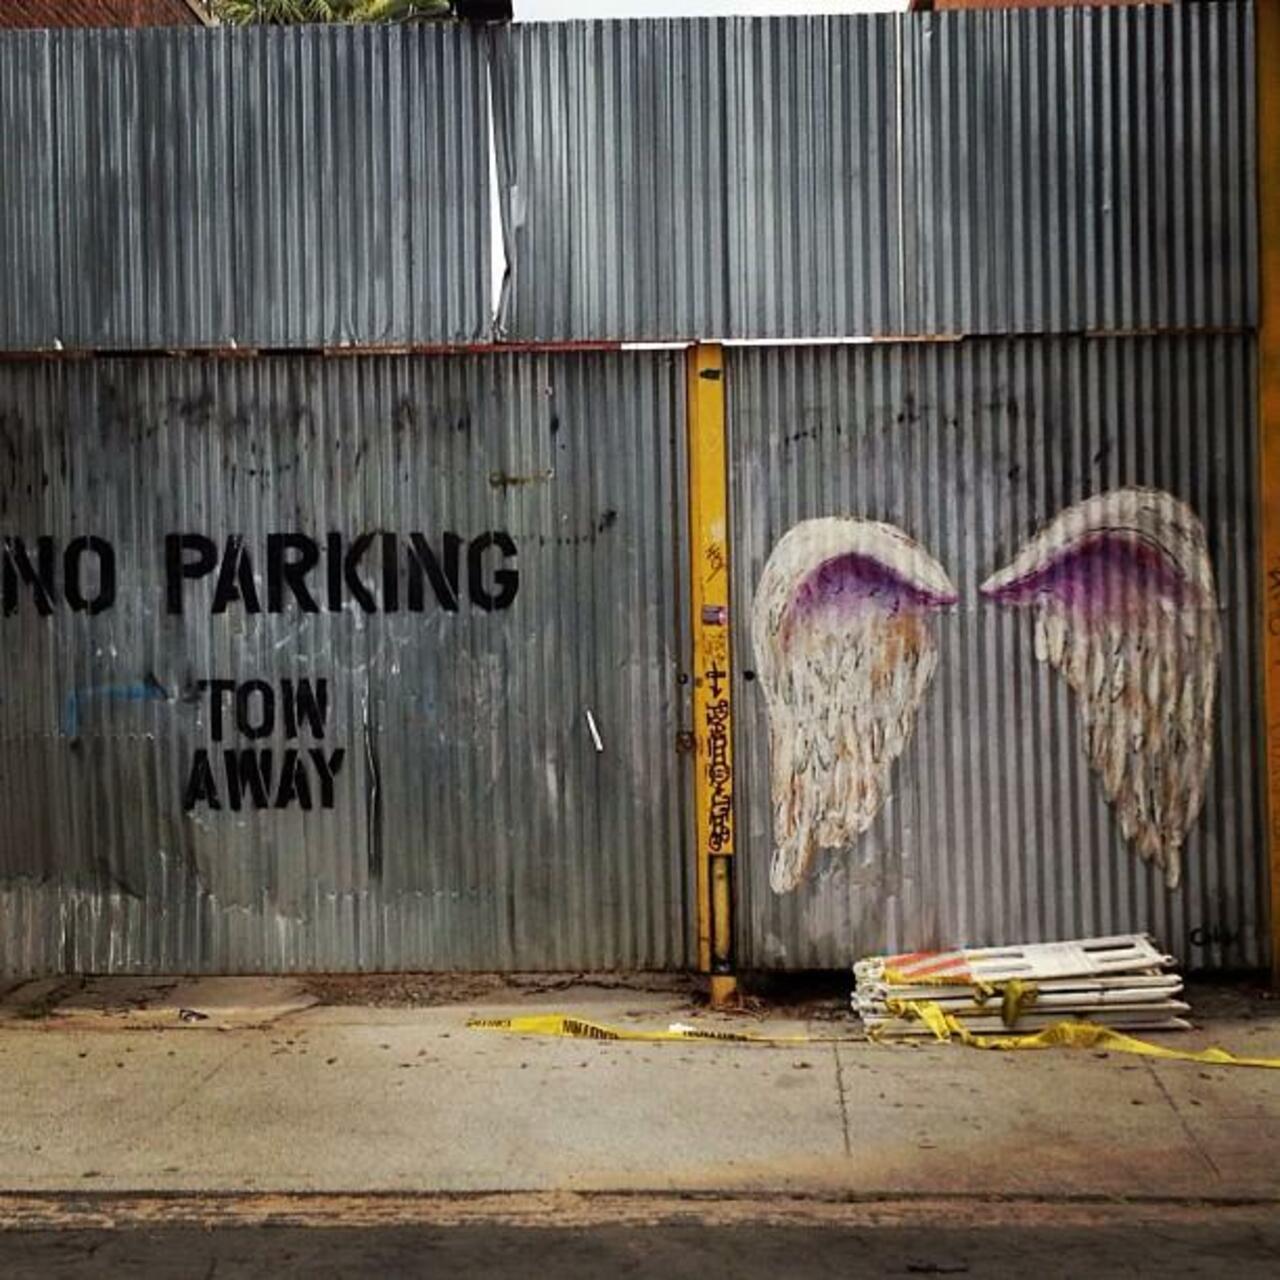 RT "@5putnik1: Angels park here • #streetart #graffiti #art #funky #dope . : http://t.co/9Uw7cfrquL"